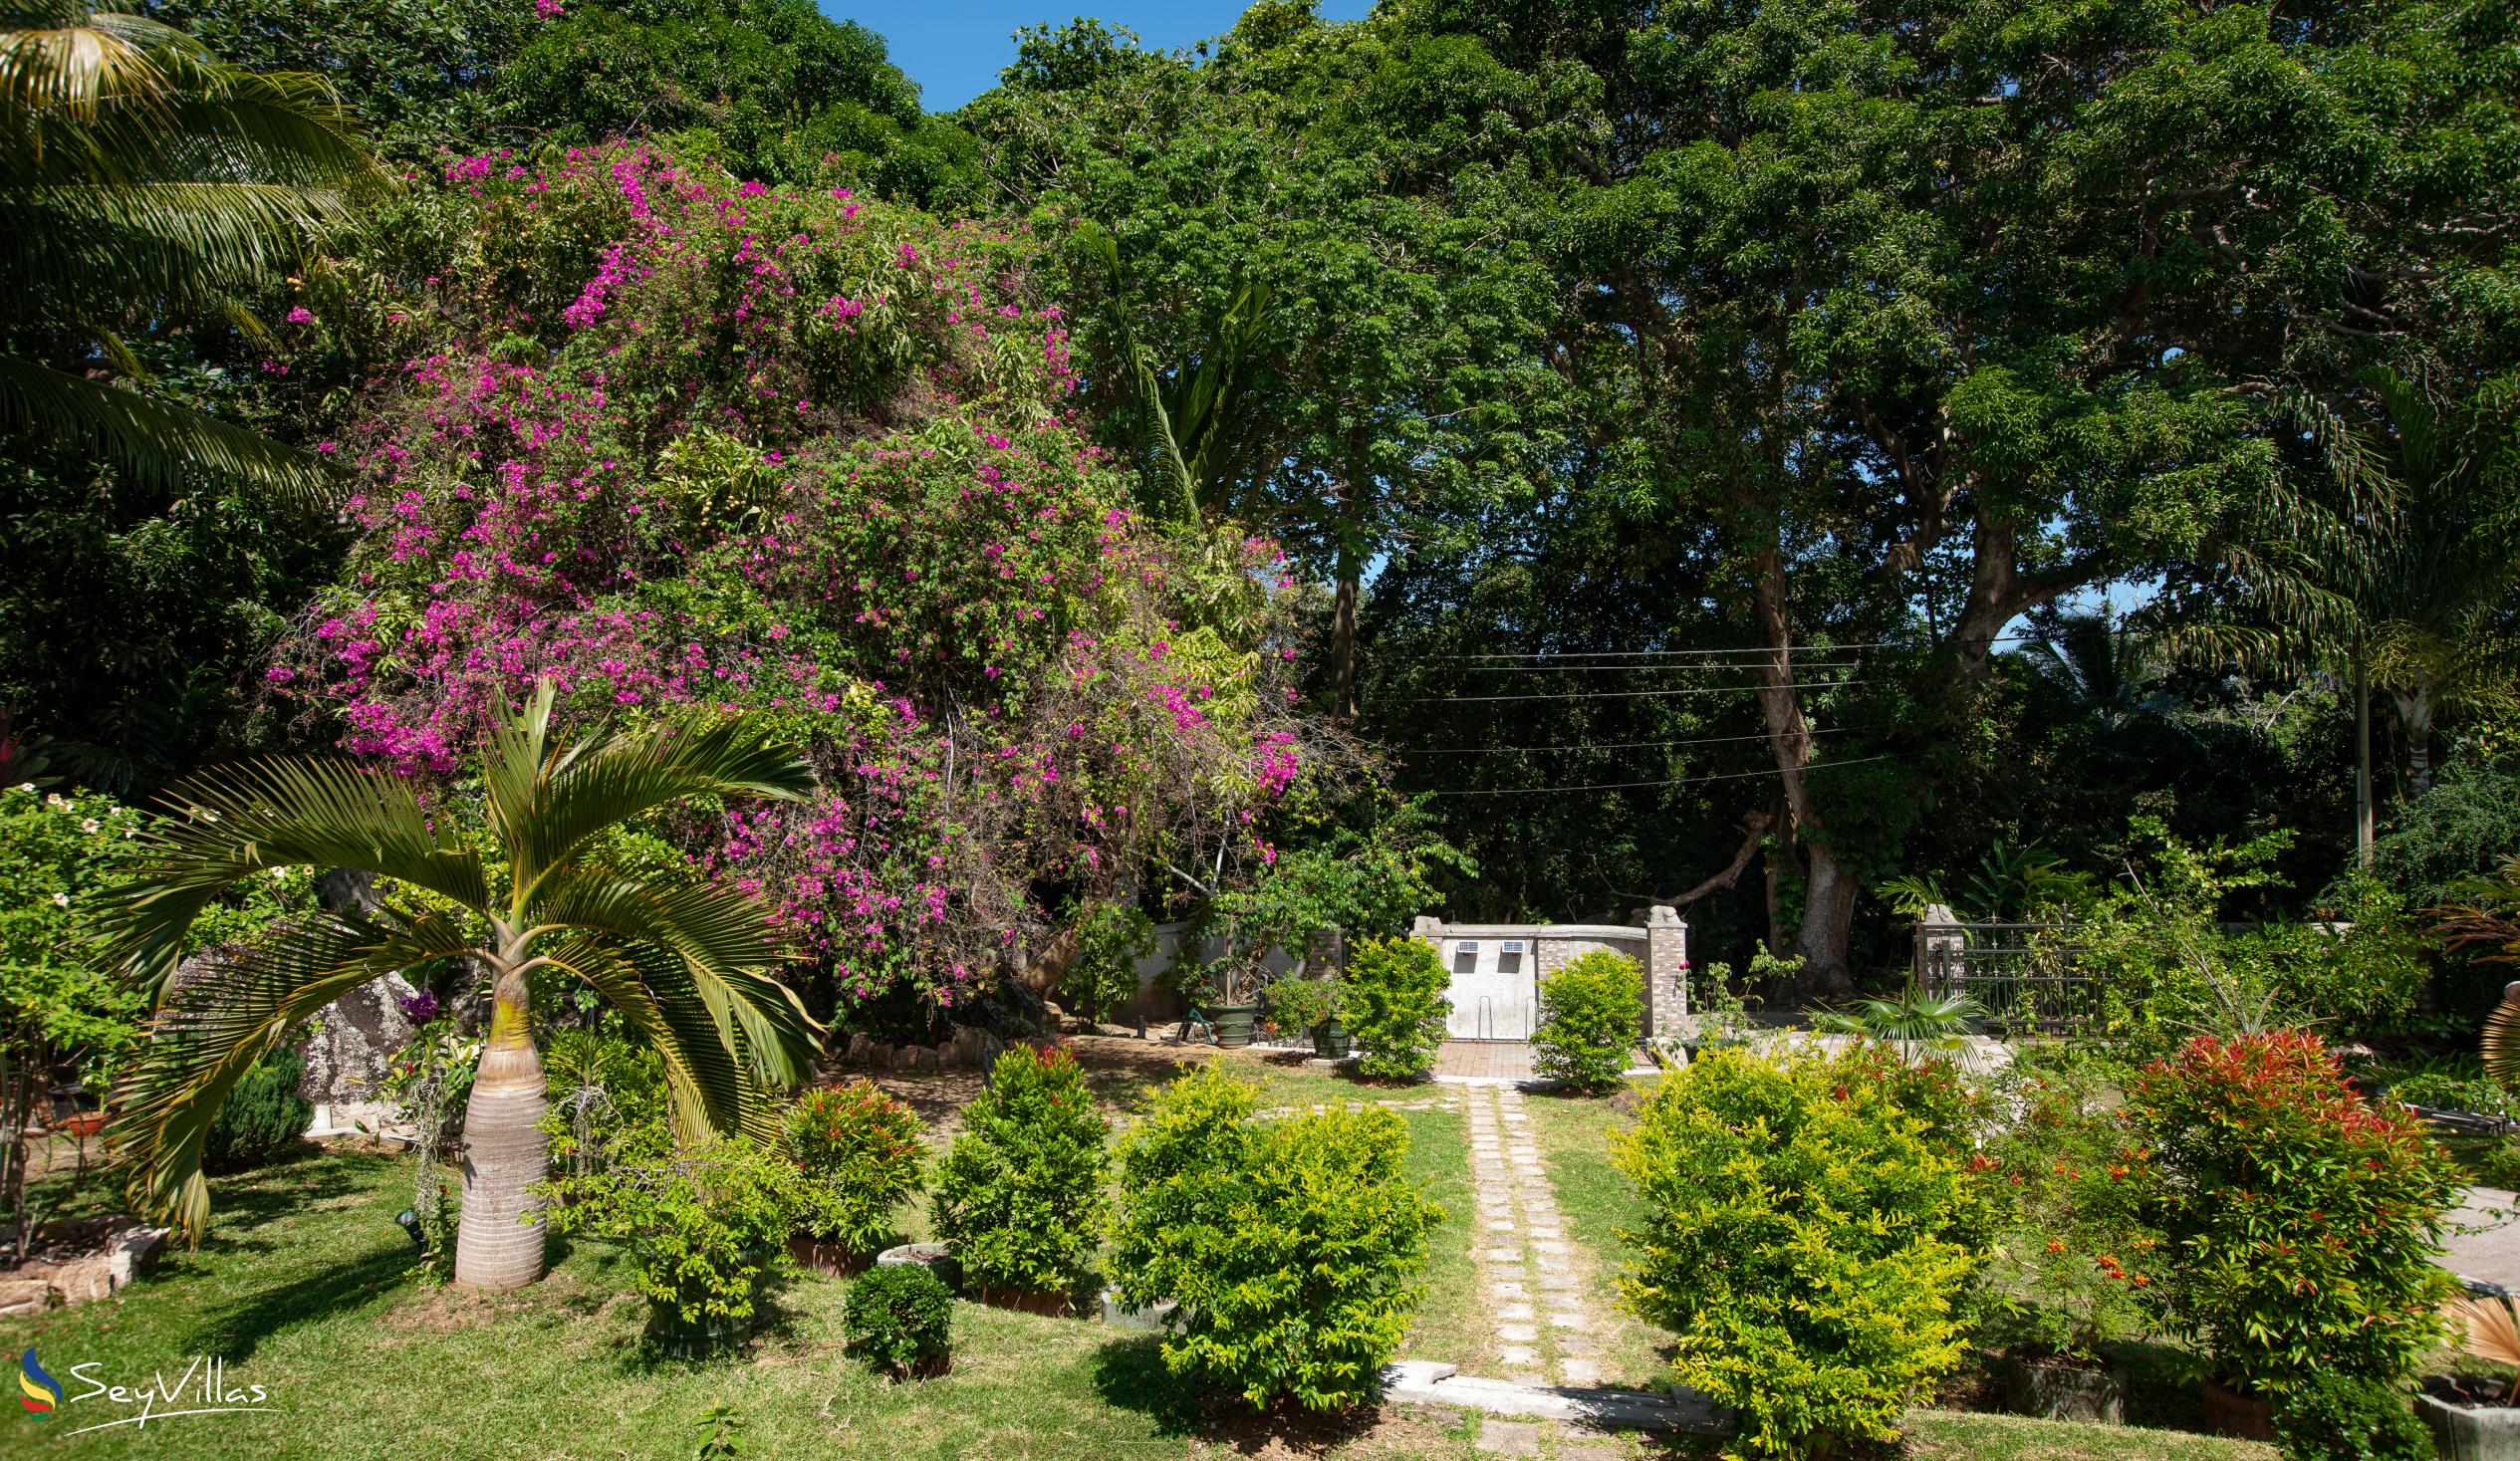 Photo 6: Pension Michel - Villa Roche Bois - Outdoor area - La Digue (Seychelles)